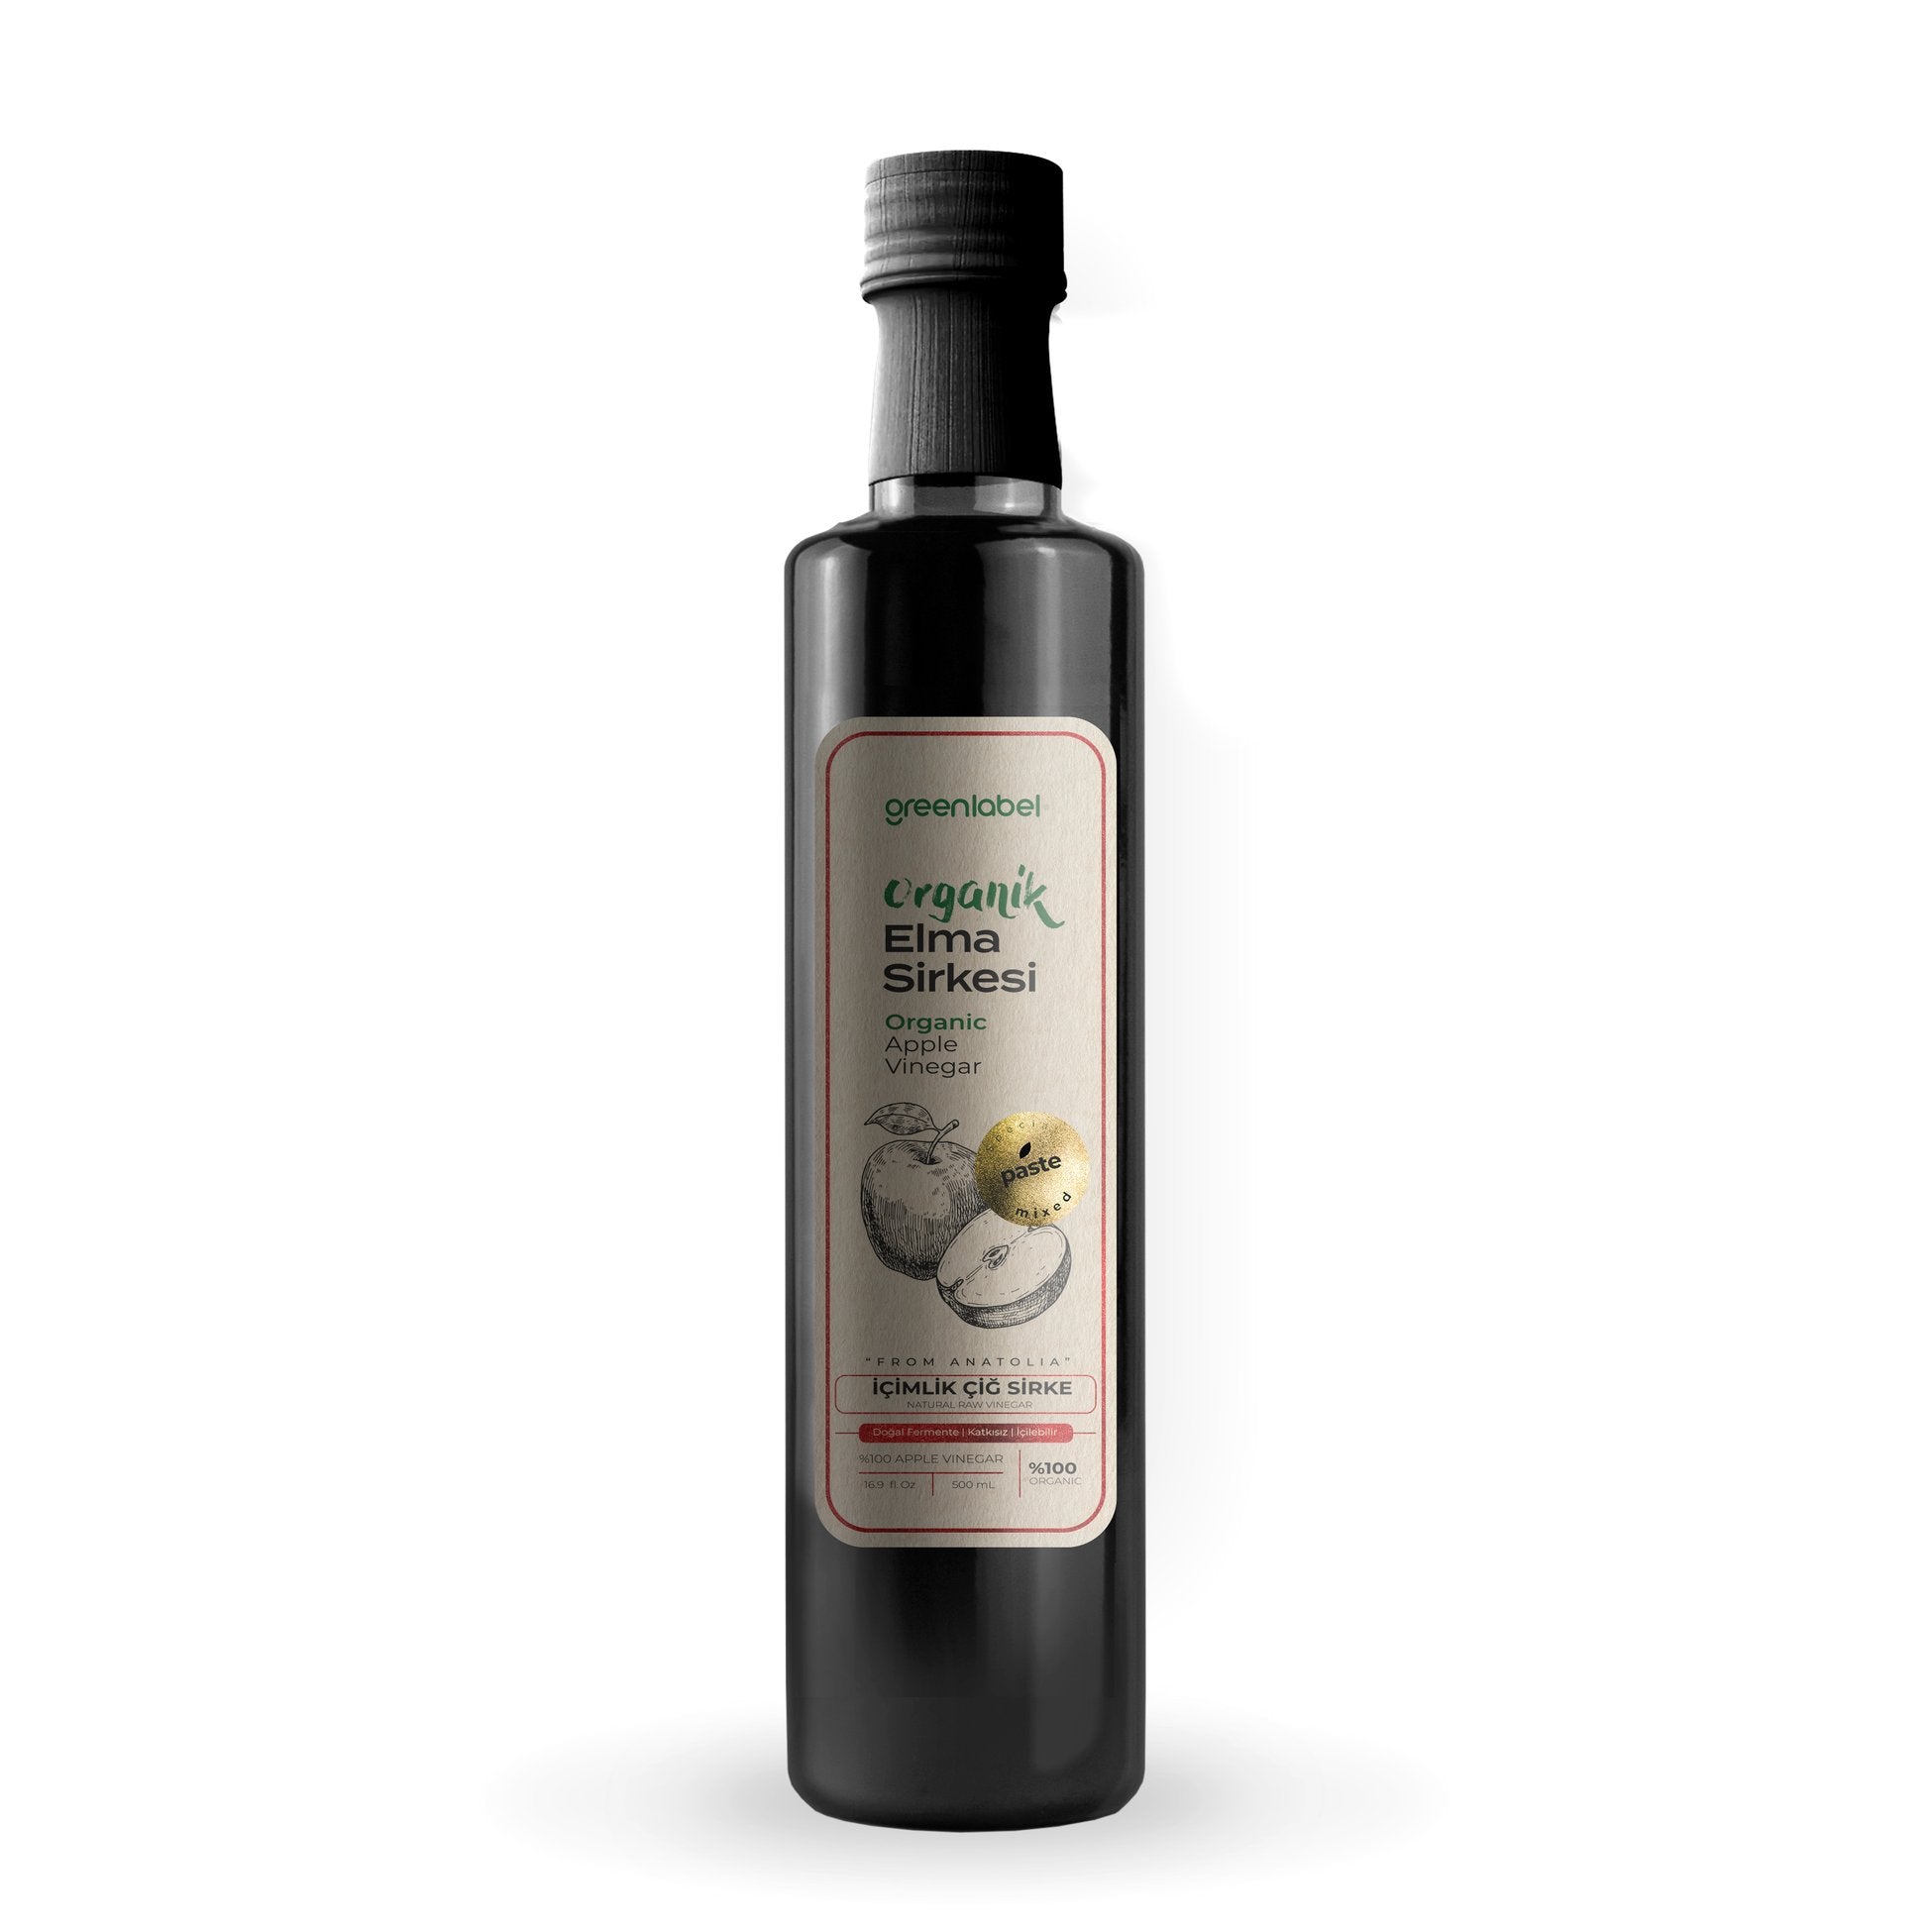 GREENLABEL Organic Apple Cider Vinegar 500ML 1